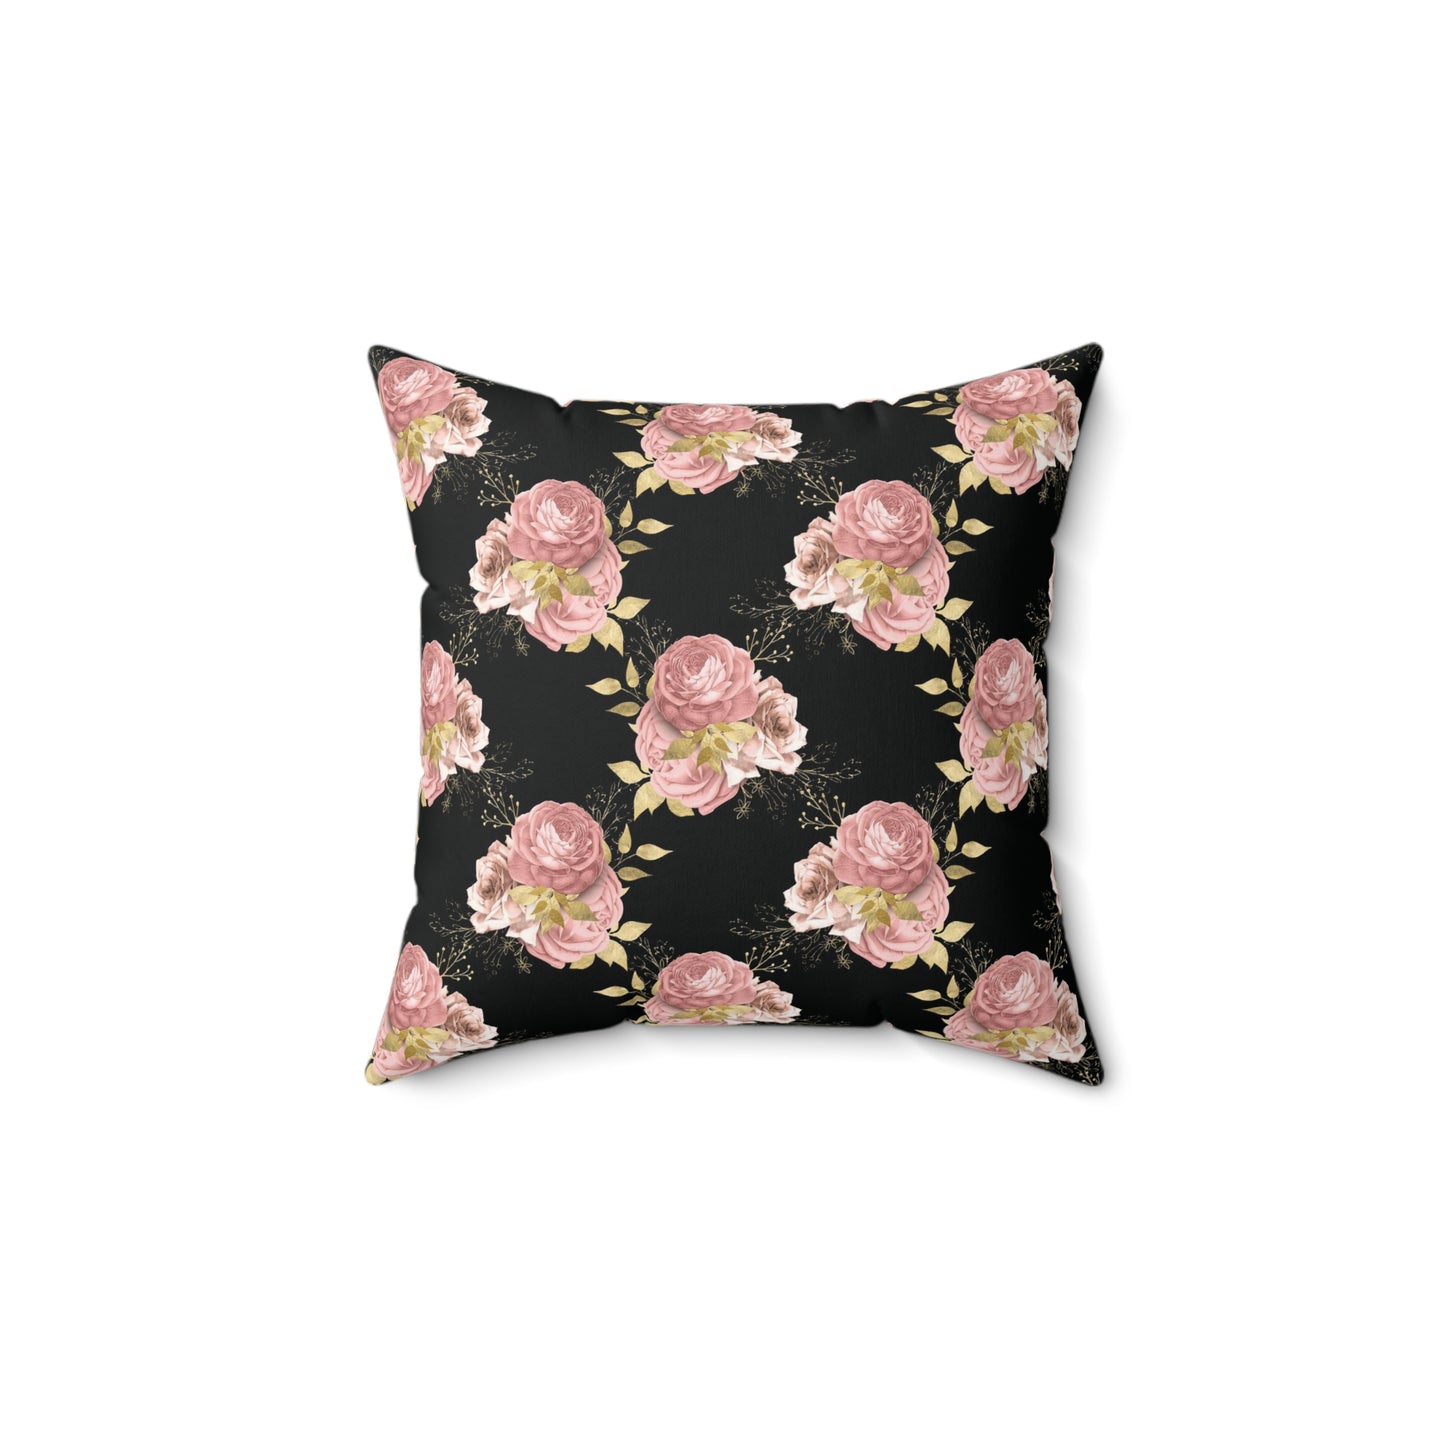 My Favorite Pink Flowers Spun Polyester Square Pillow